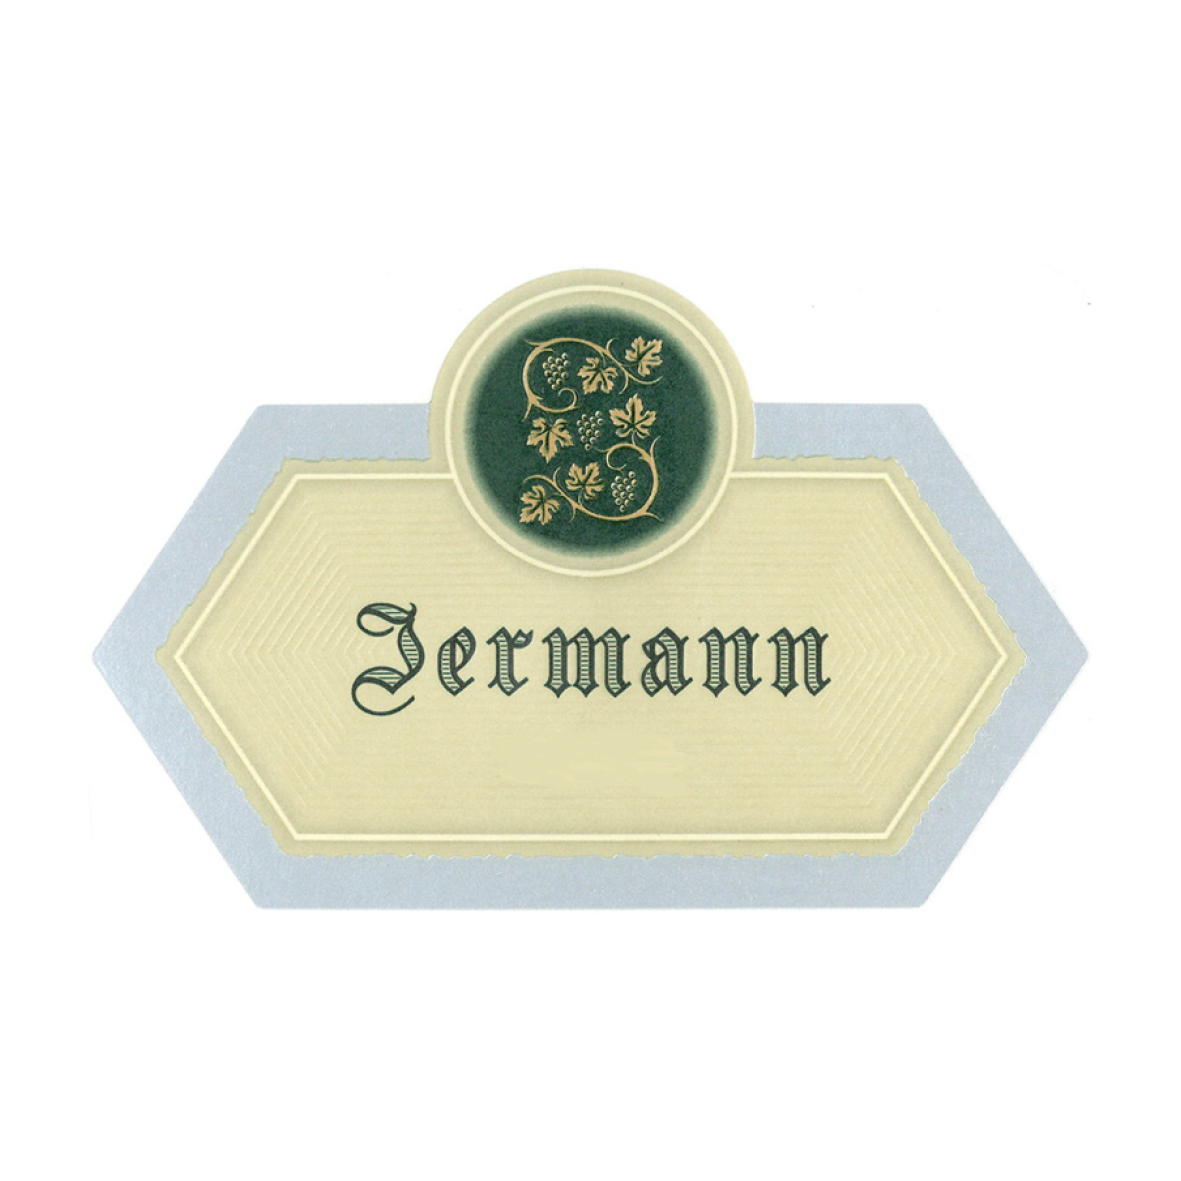 Jermann wineyard logo